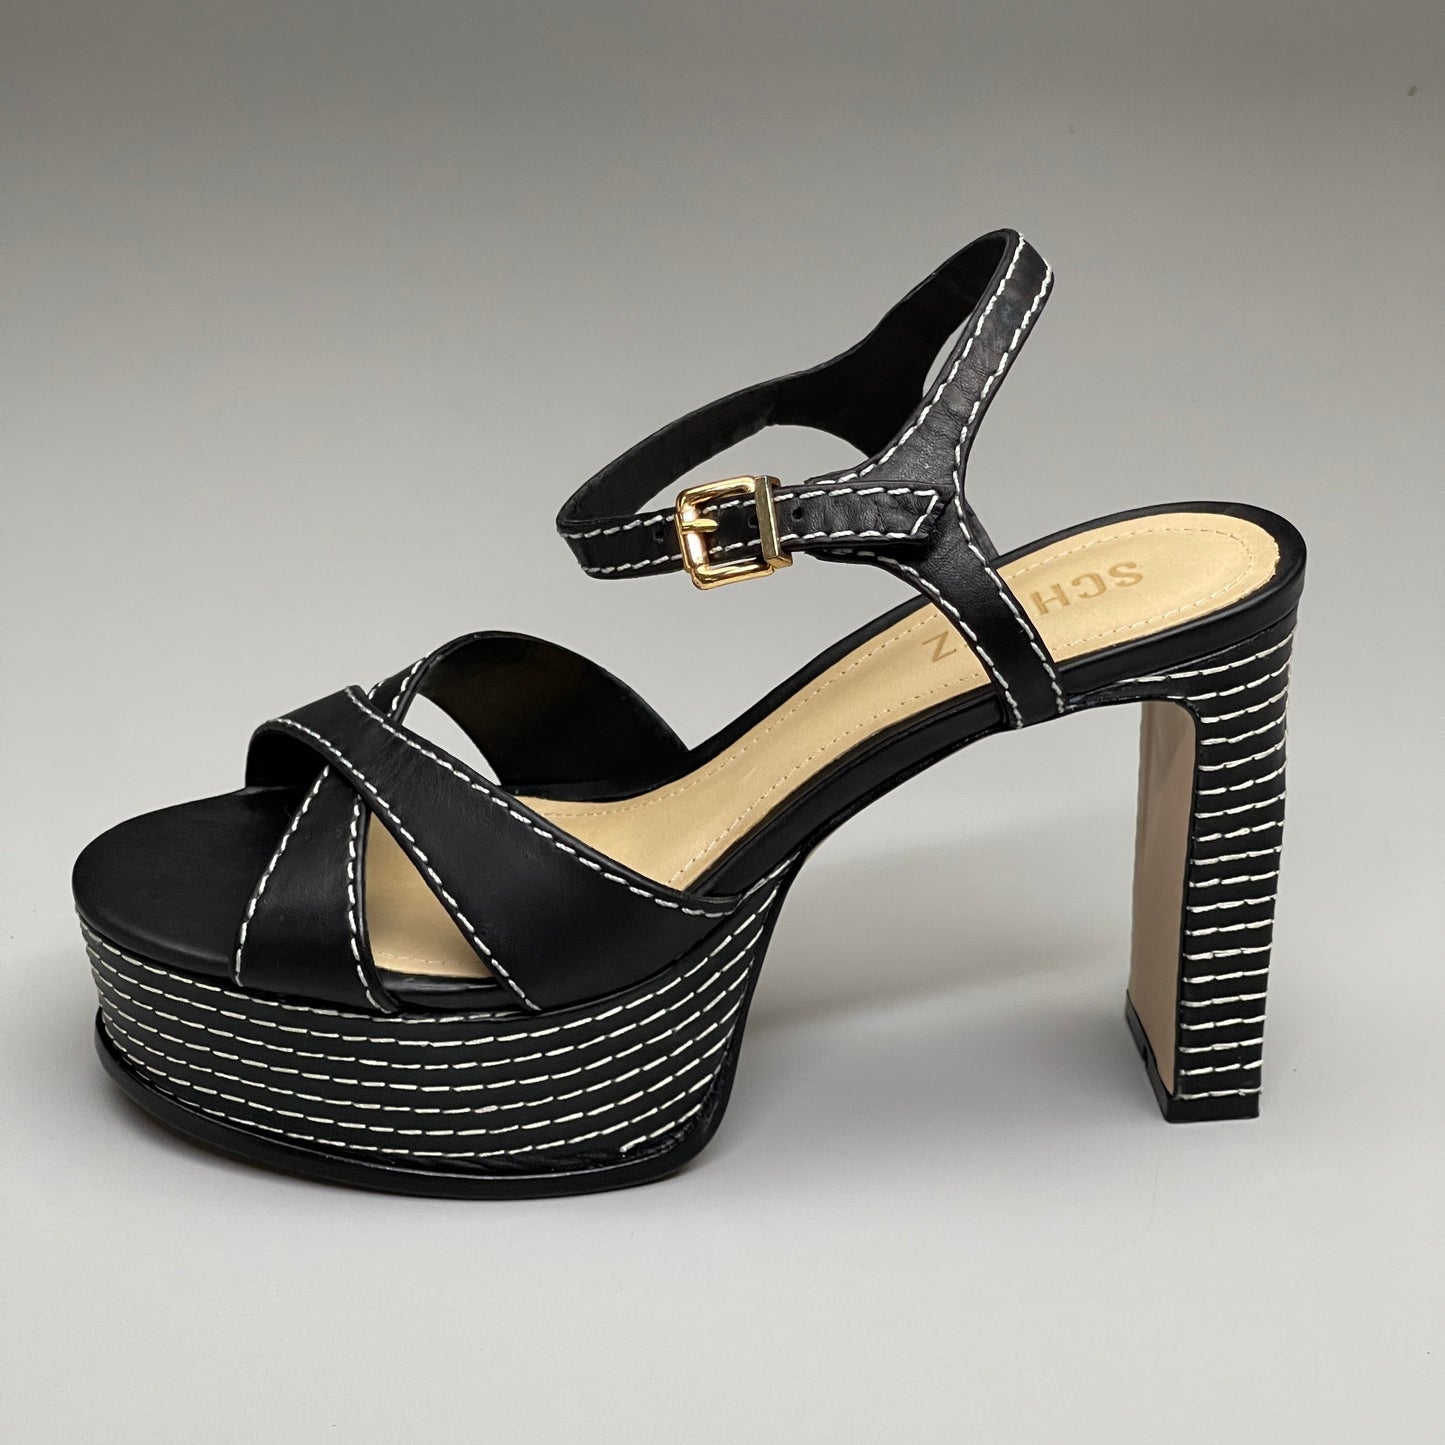 SCHUTZ Keefa Casual Women's Leather Sandal Black Platform 4" Heel Shoes Sz 10B (New)